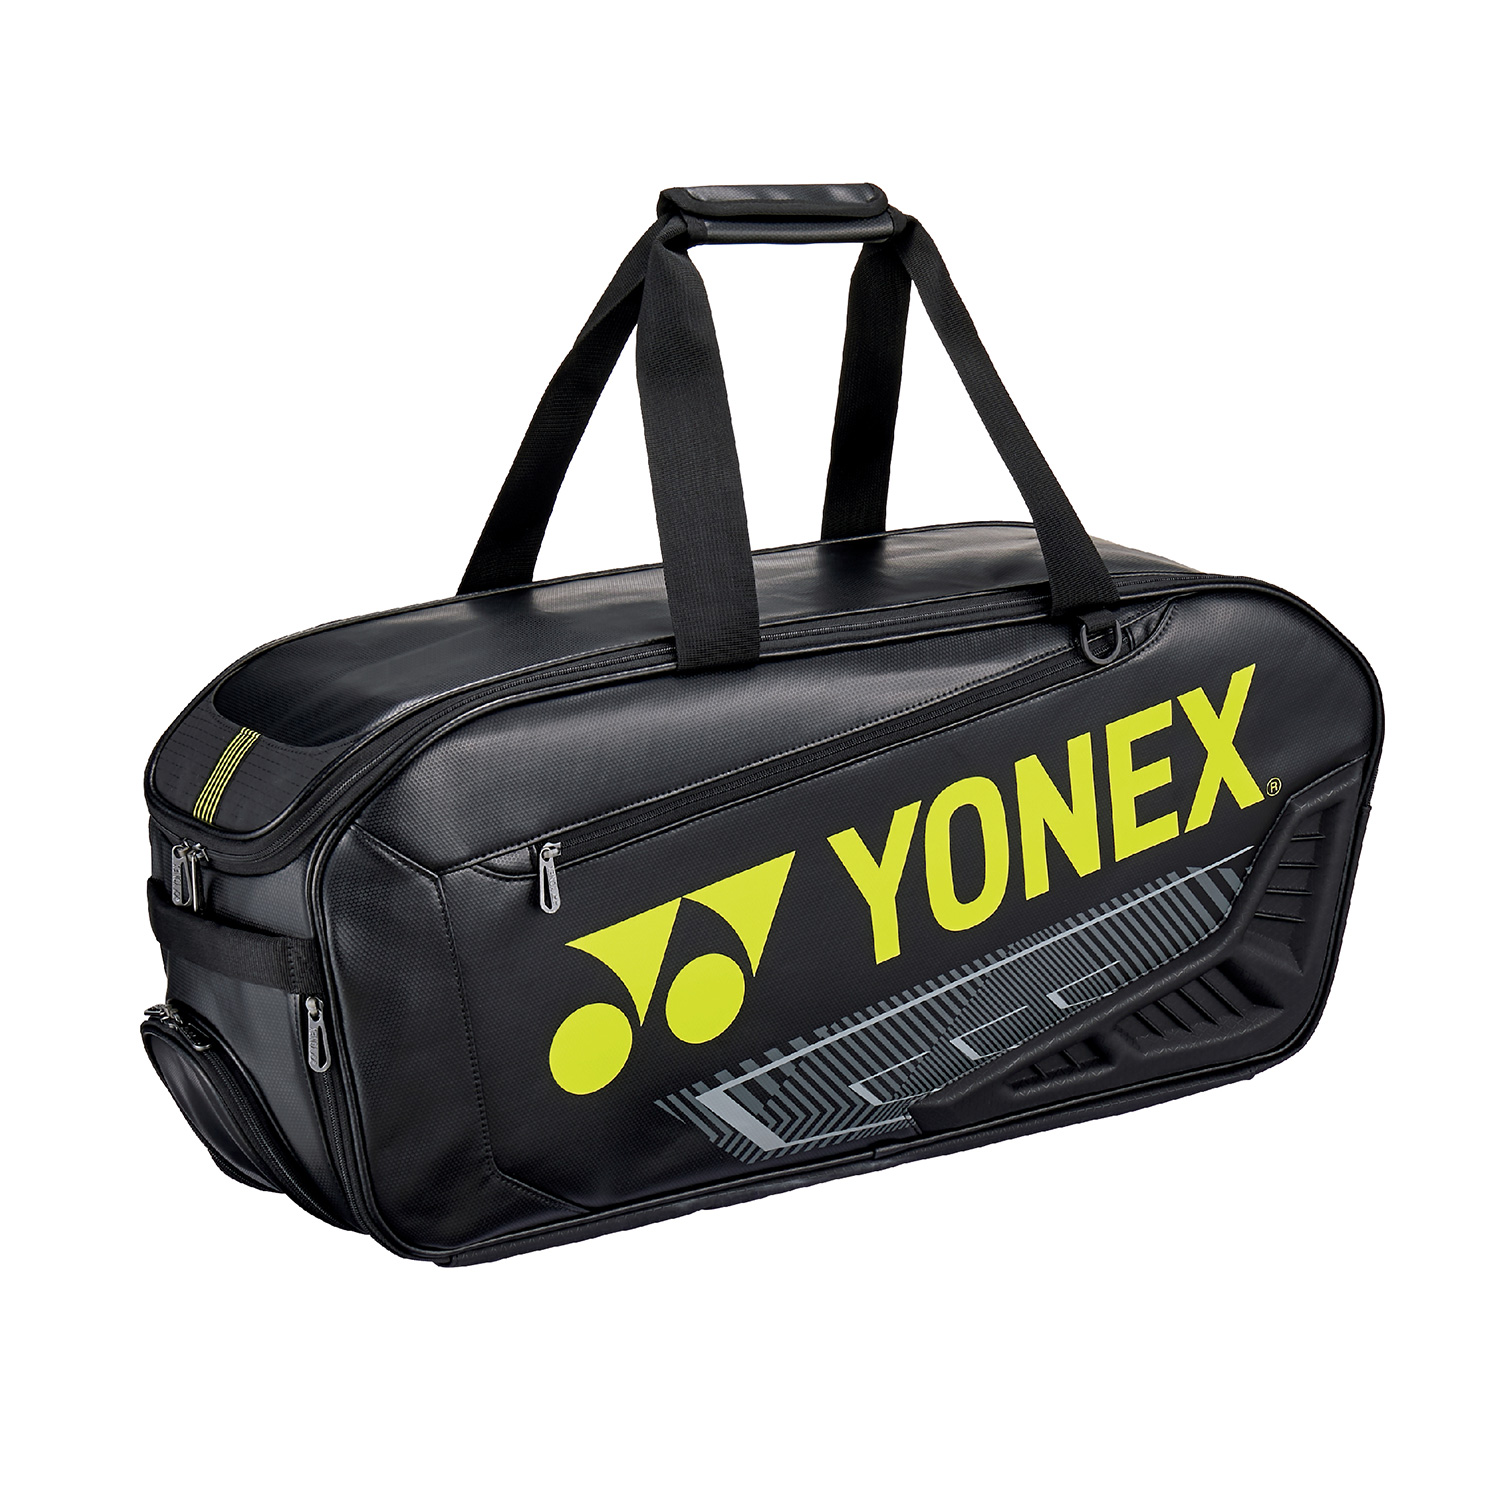 Yonex Expert Tournament Duffle - Black/Yellow